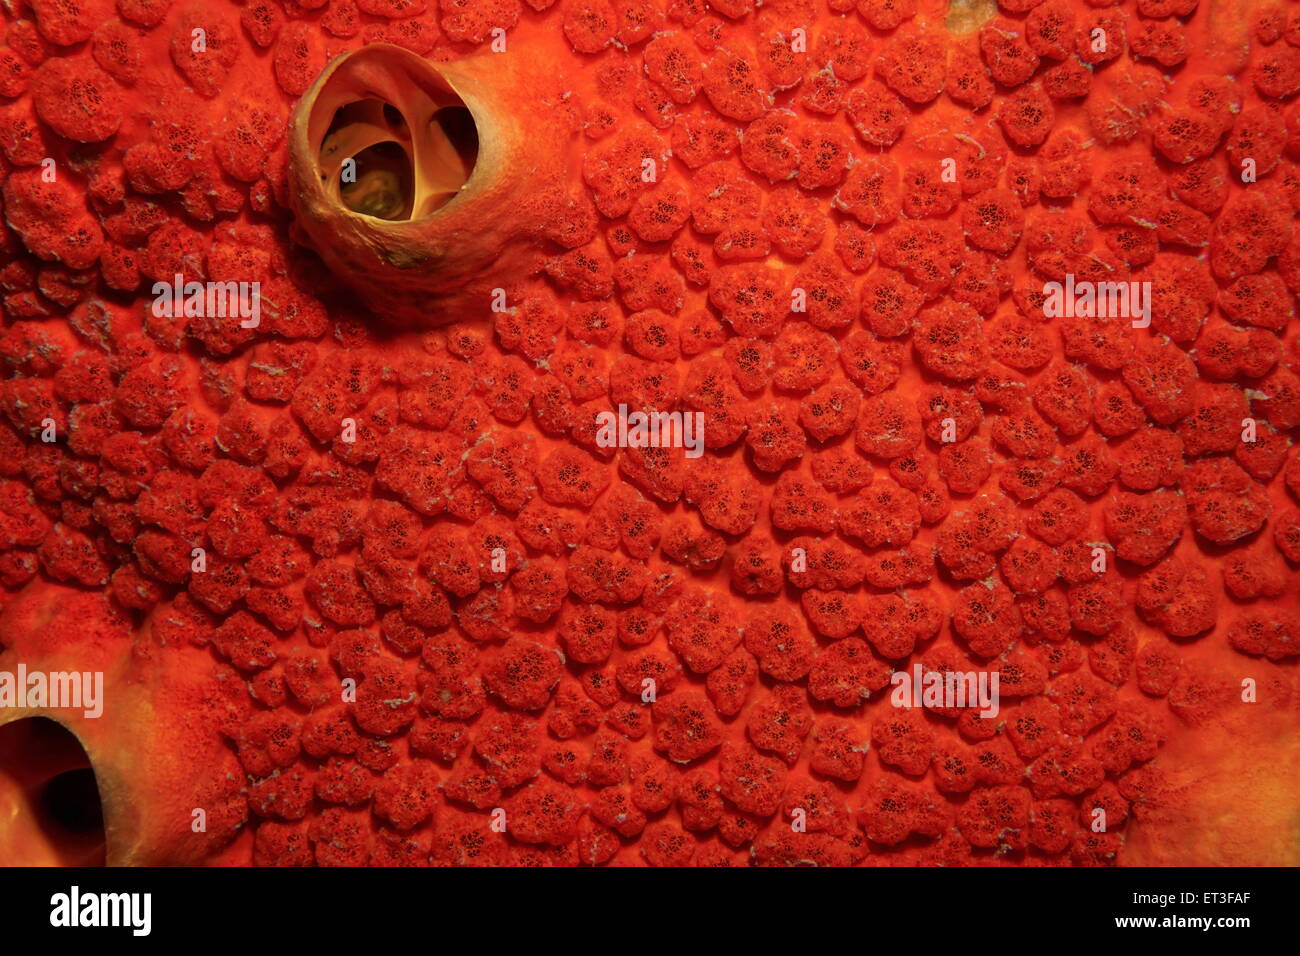 Underwater life, close up image of red boring sponge, Cliona delitrix, Caribbean sea Stock Photo